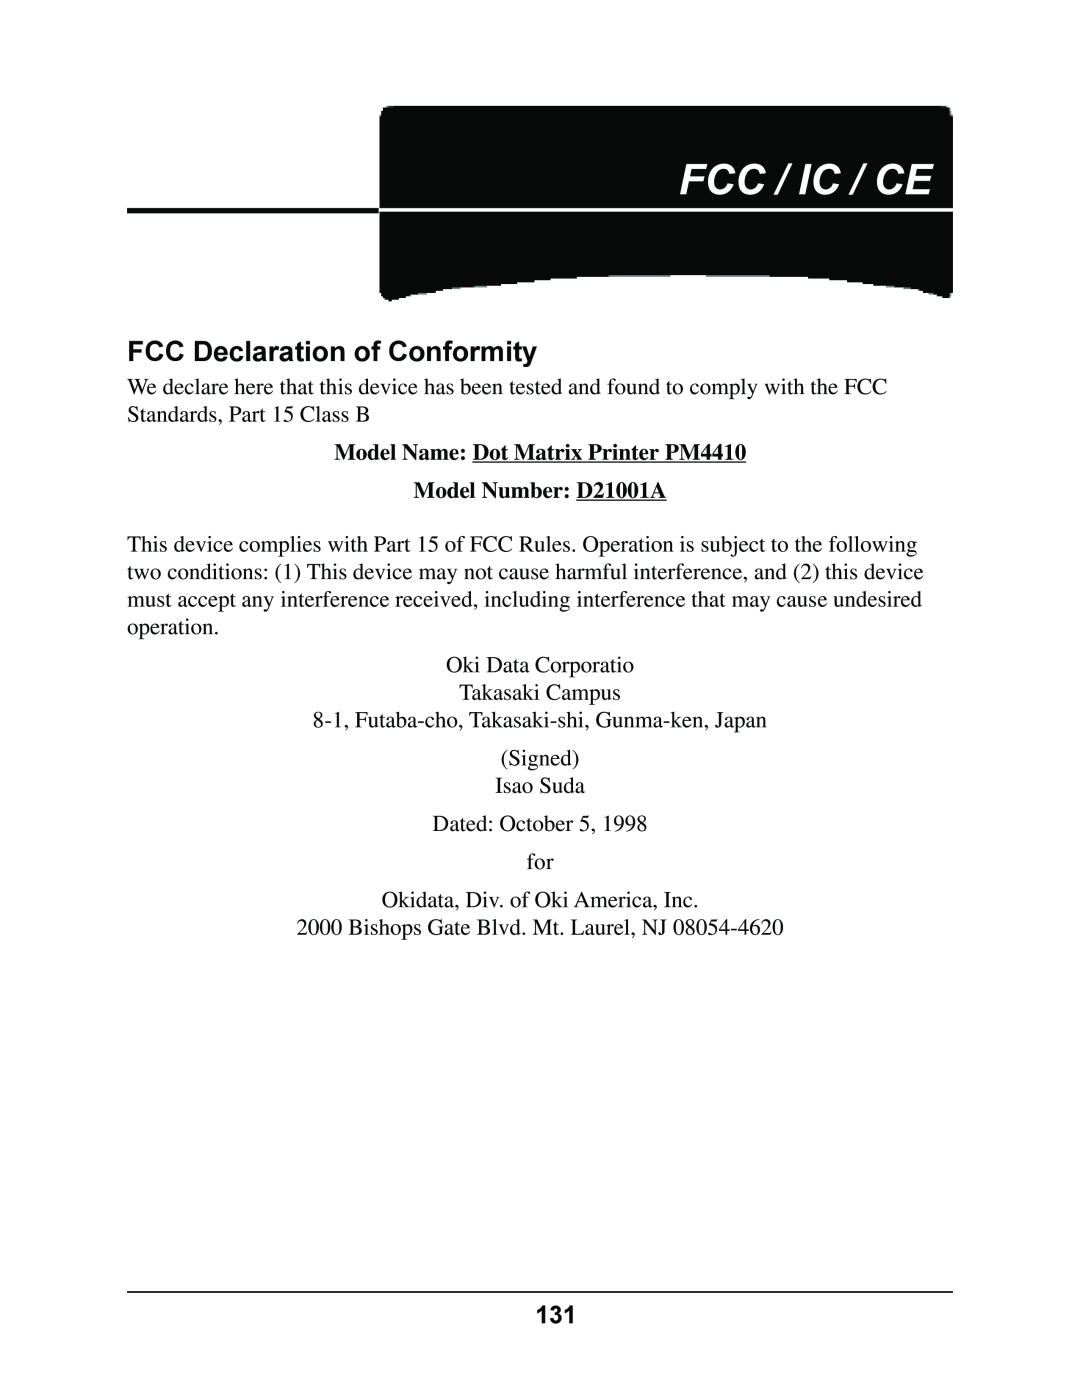 Oki manual Fcc / Ic / Ce, FCC Declaration of Conformity, Model Name Dot Matrix Printer PM4410 Model Number D21001A 